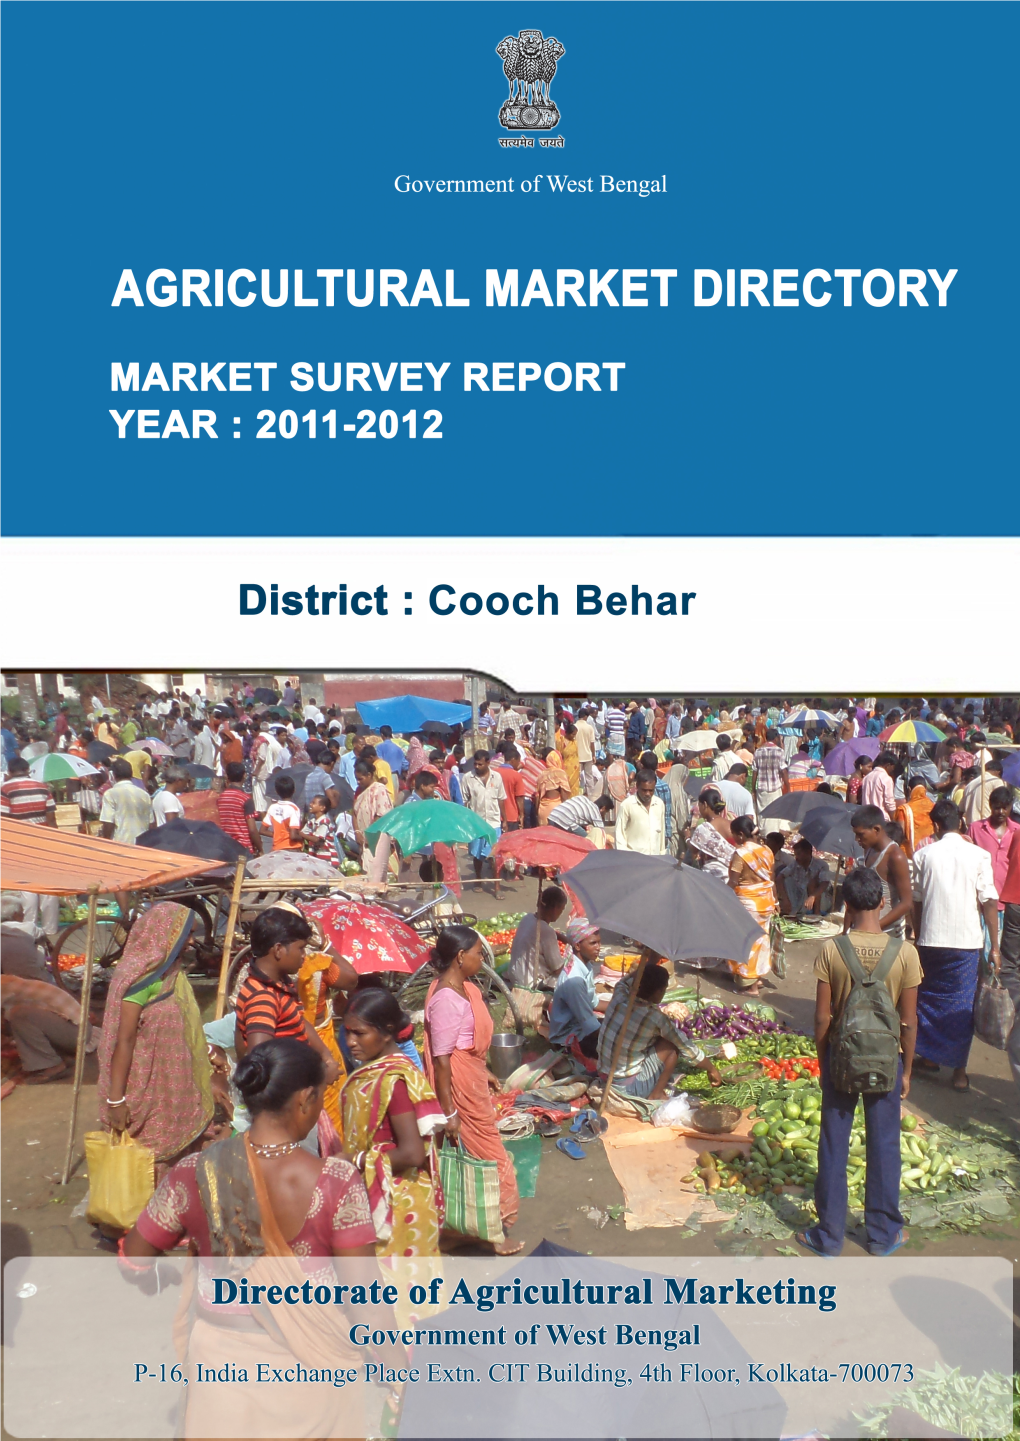 Market Survey Report Year : 2011-2012